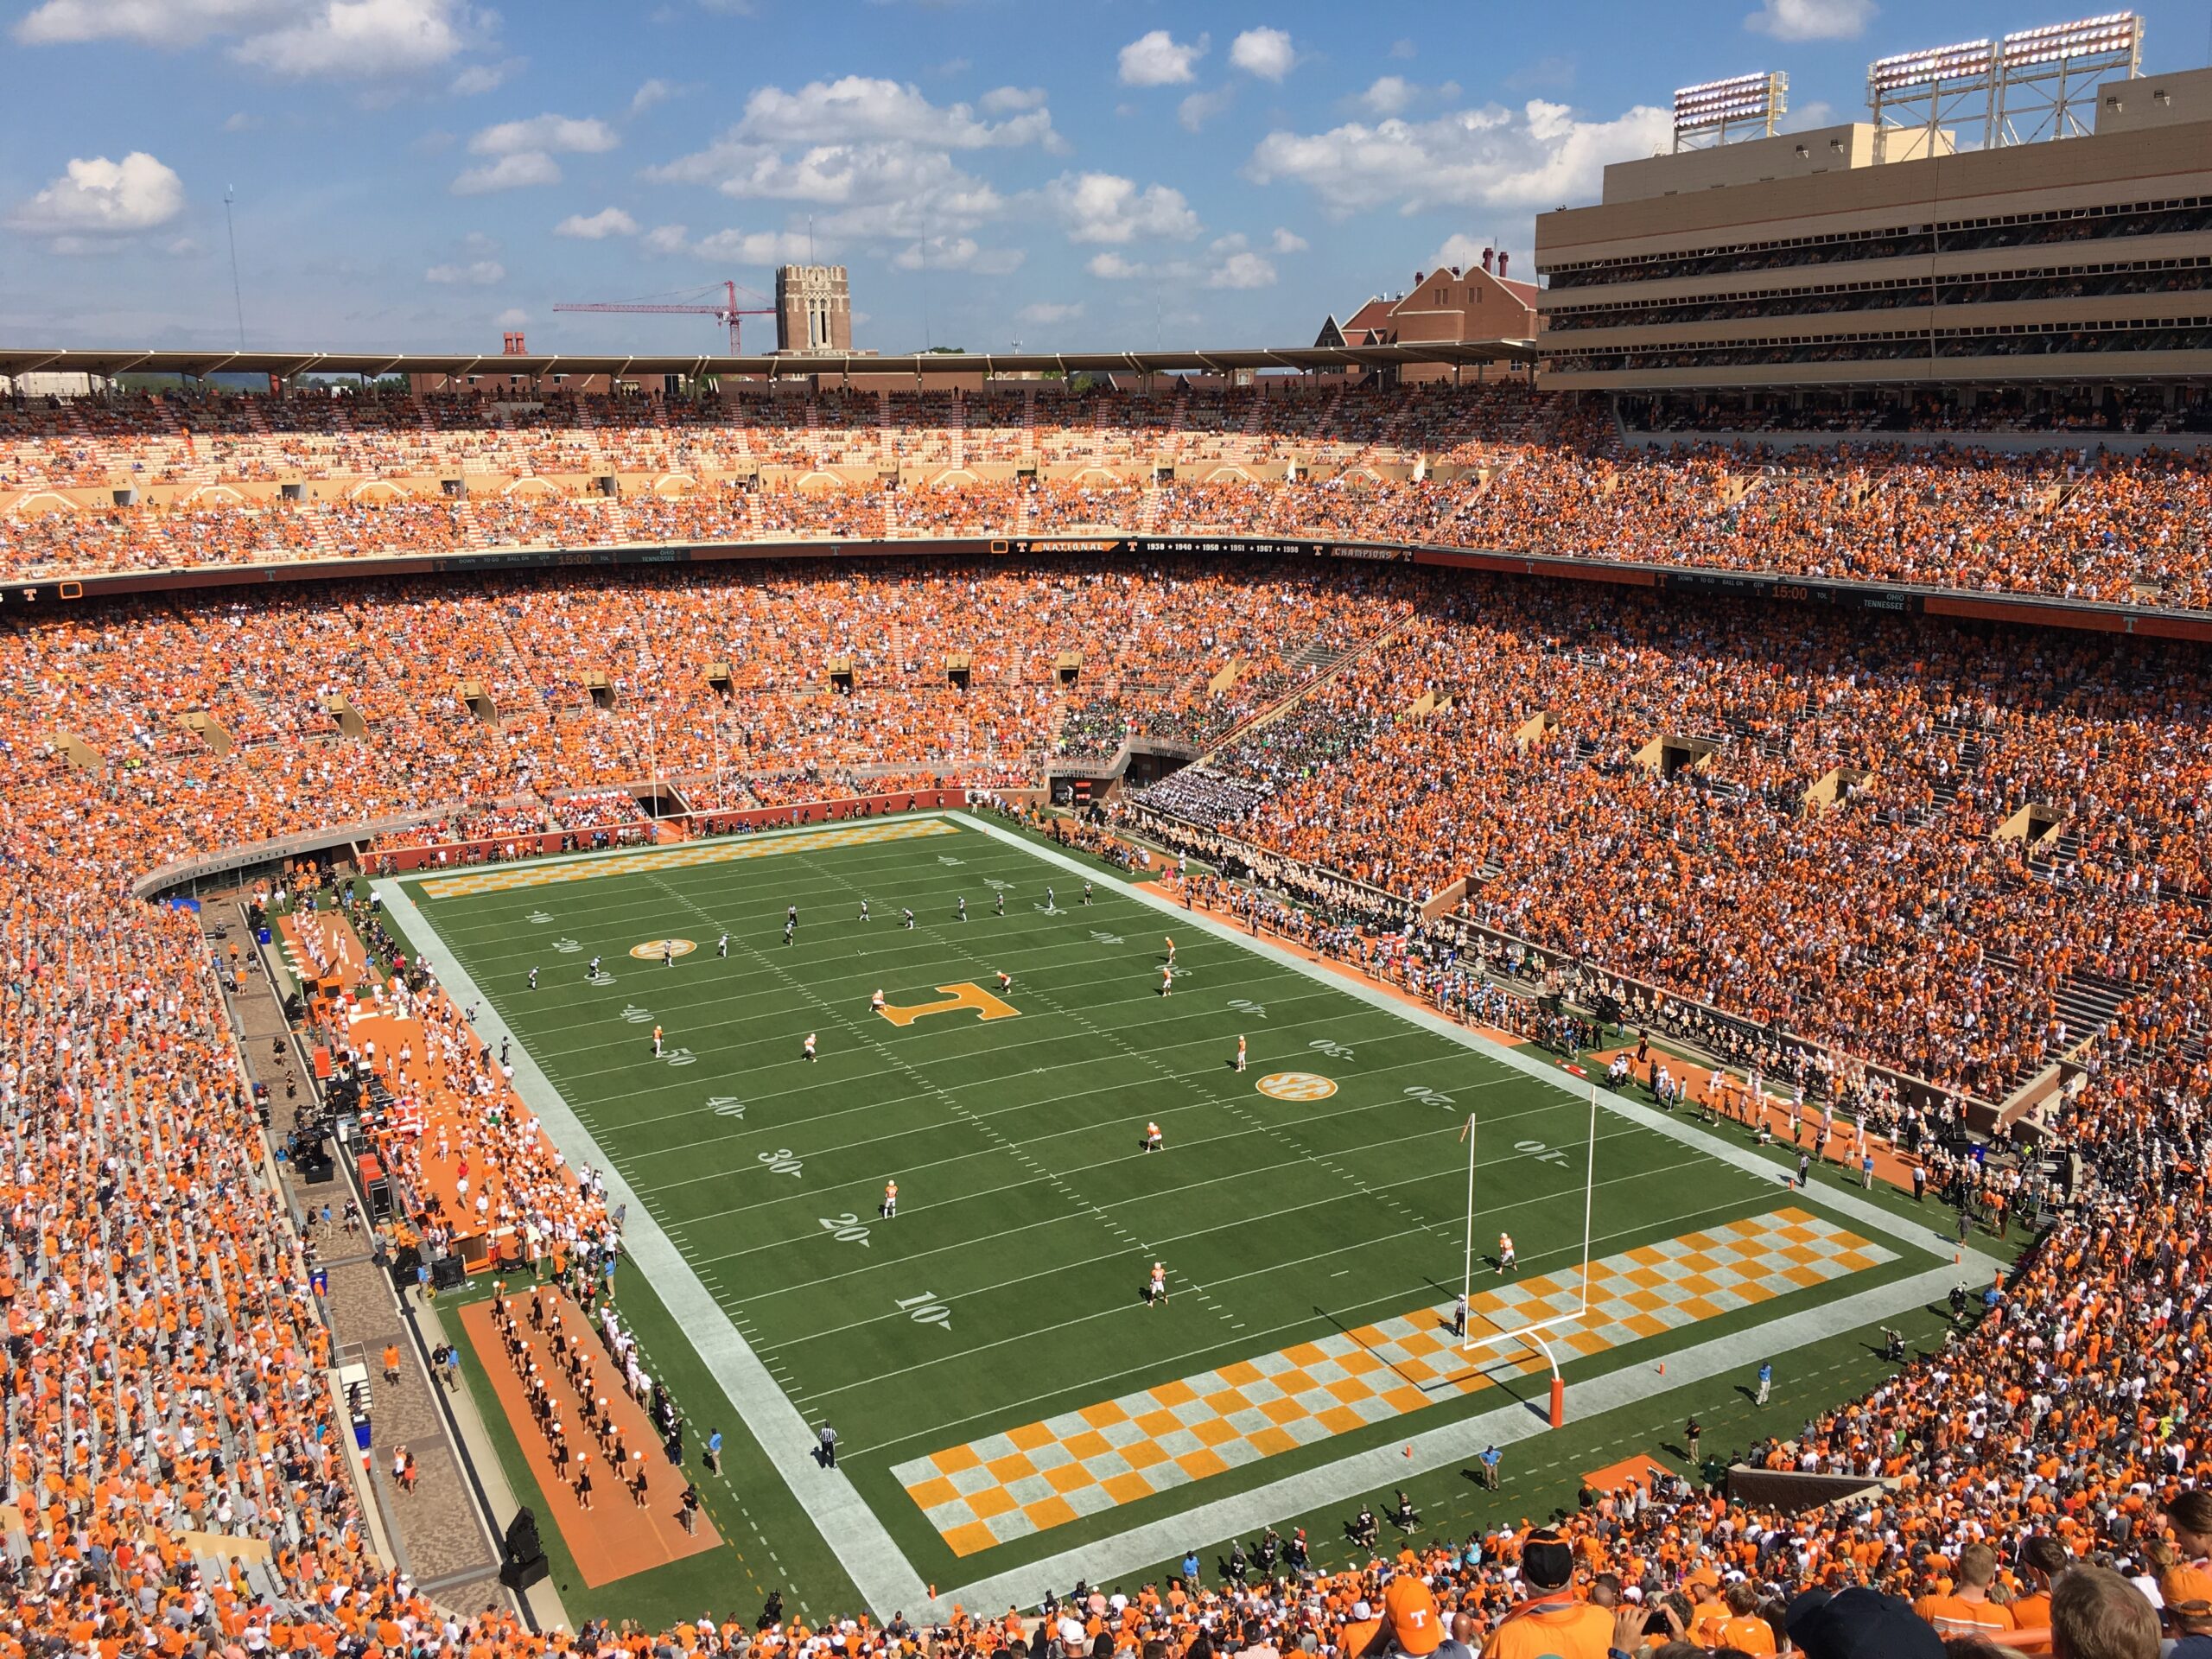 University of Tennessee Football stadium, a sea of orange and white